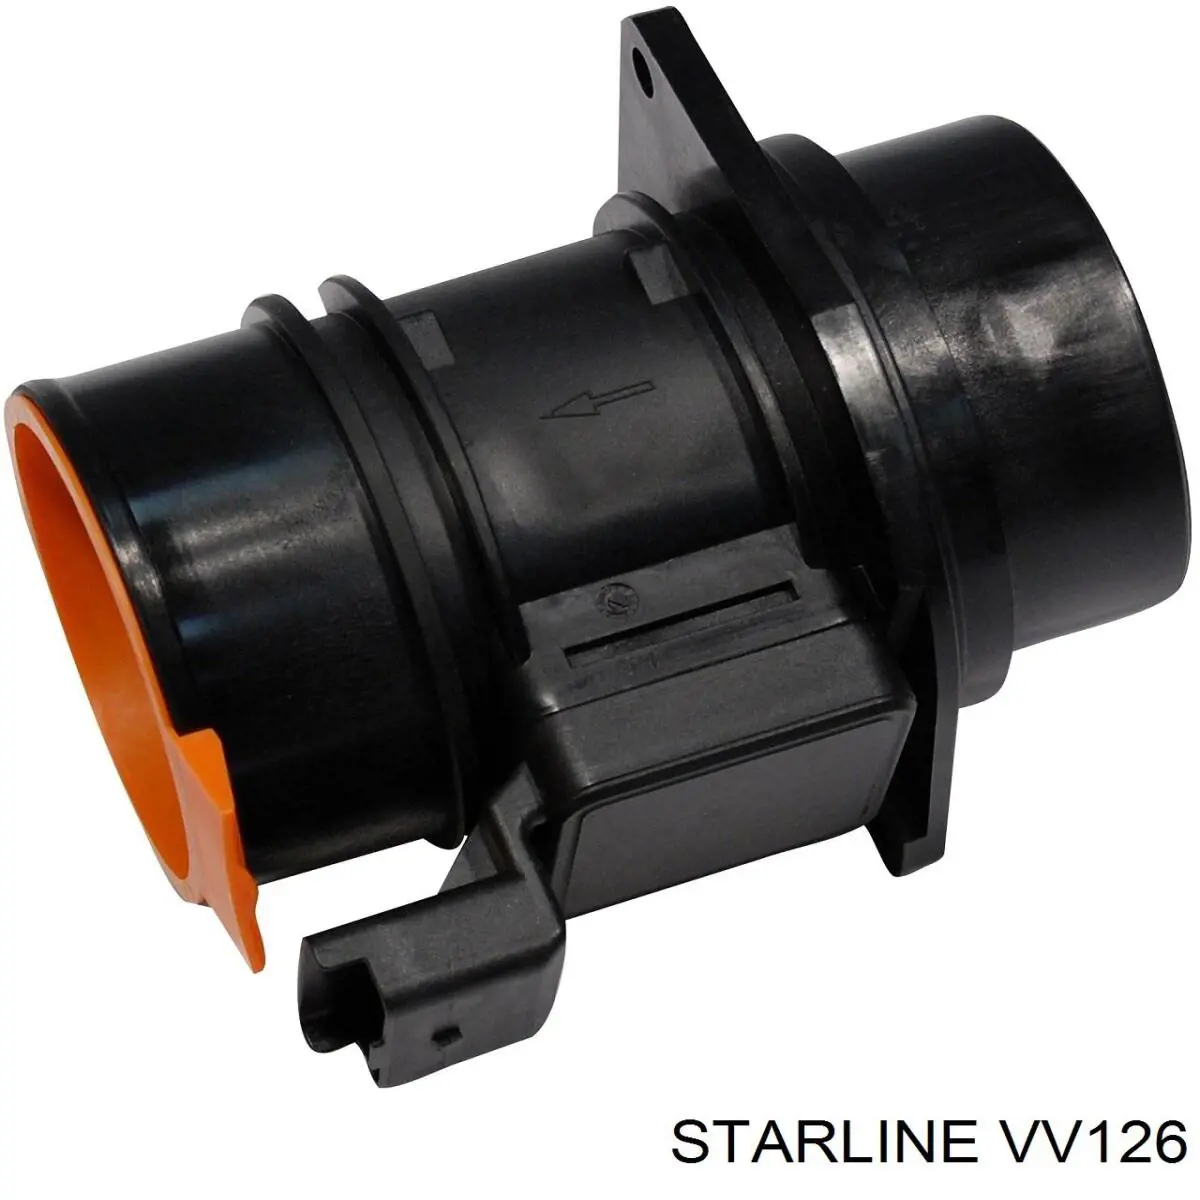 VV126 Starline medidor de masa de aire